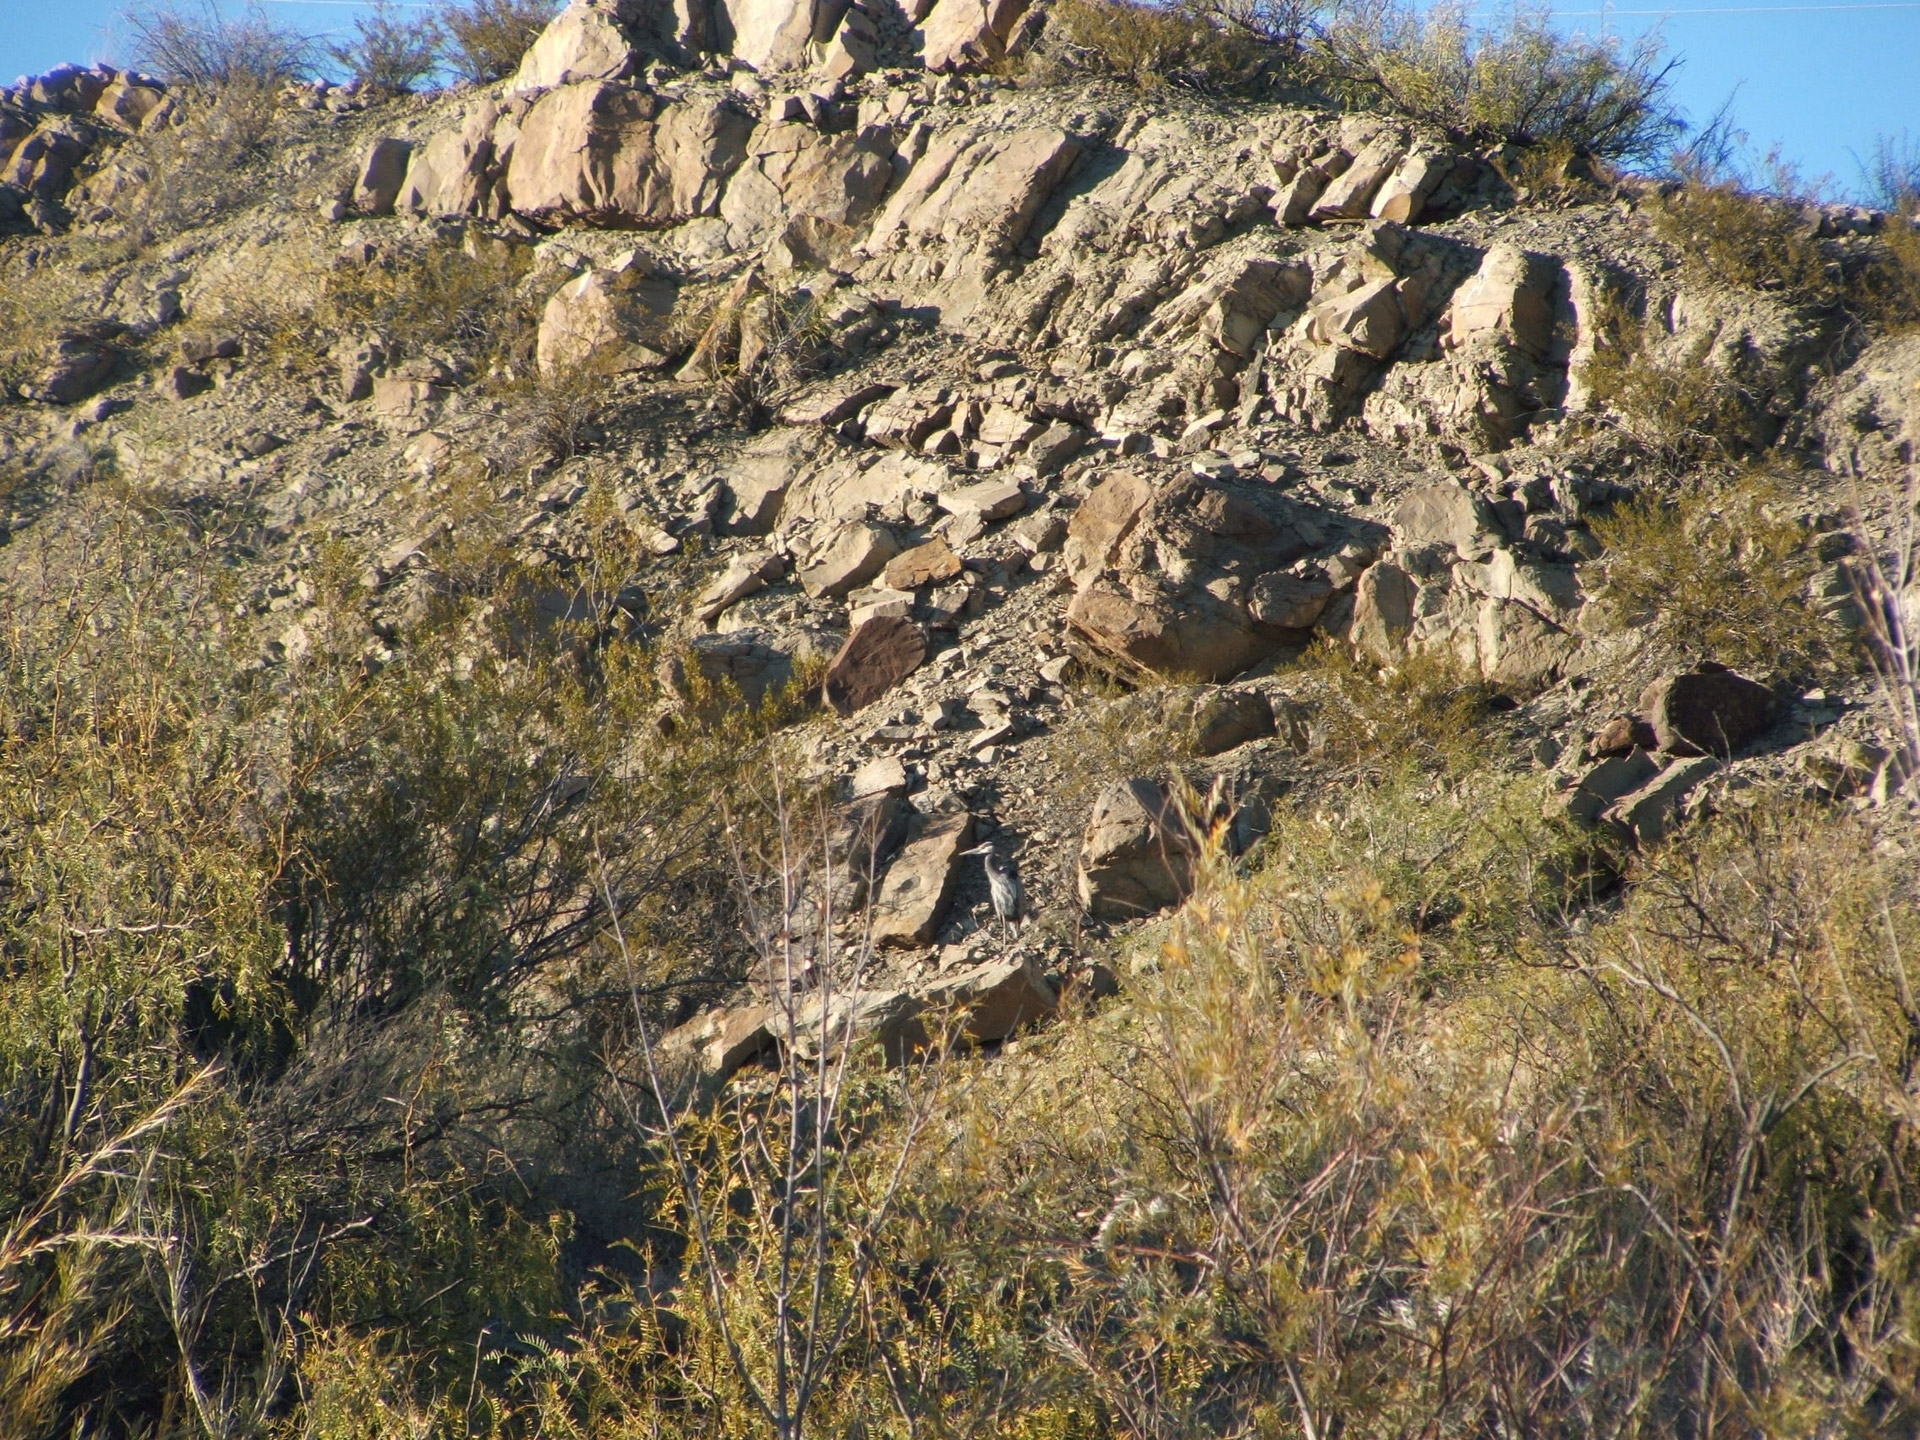 Blue Heron Hiding In Rocks